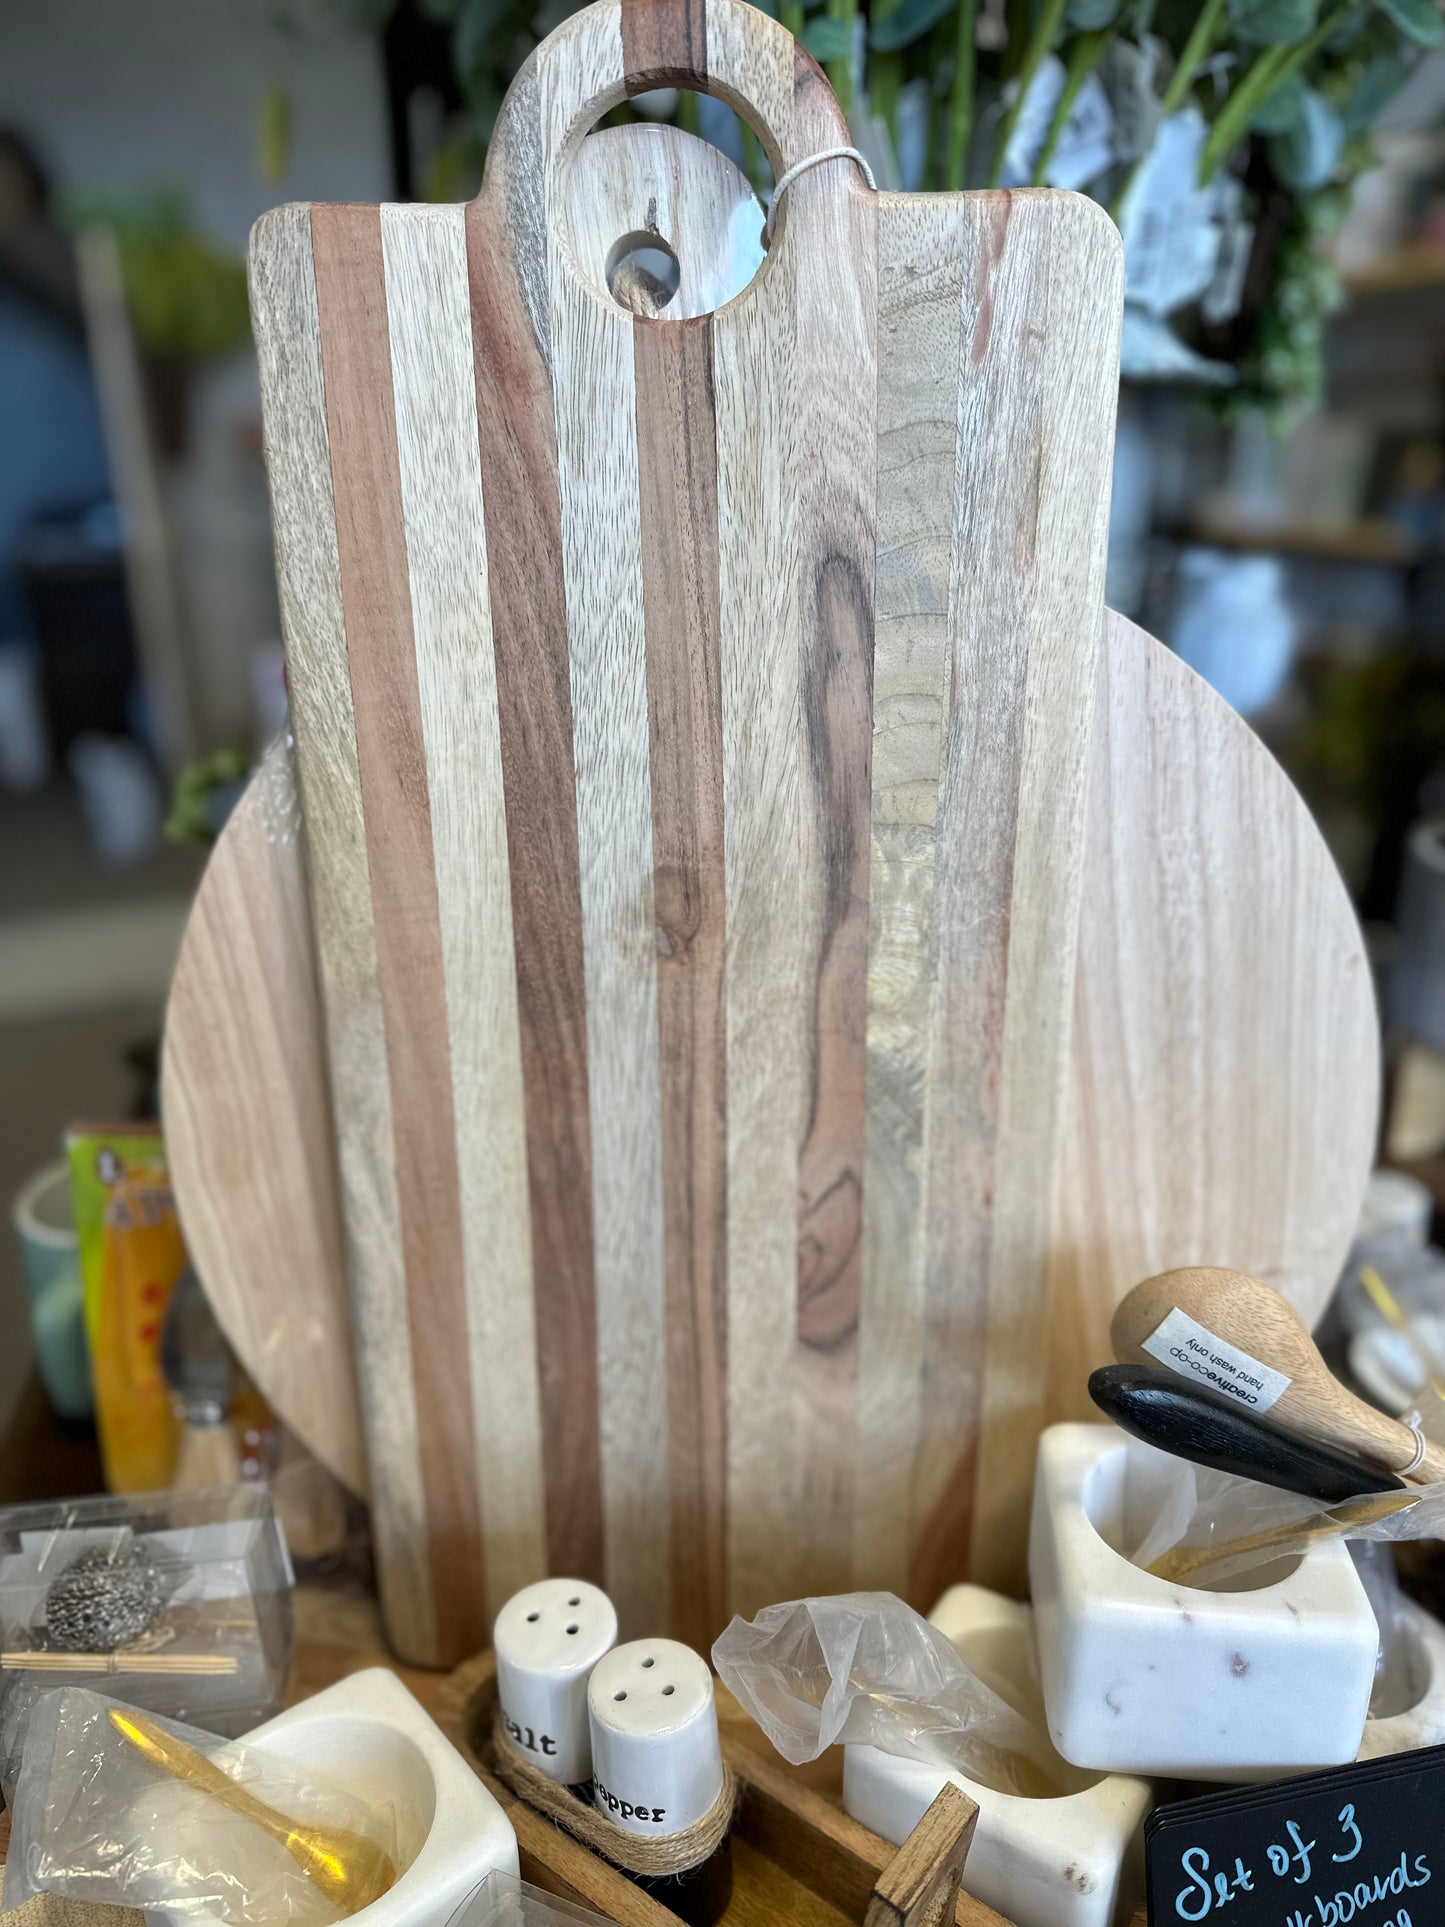 Mixed Wood Cutting Board